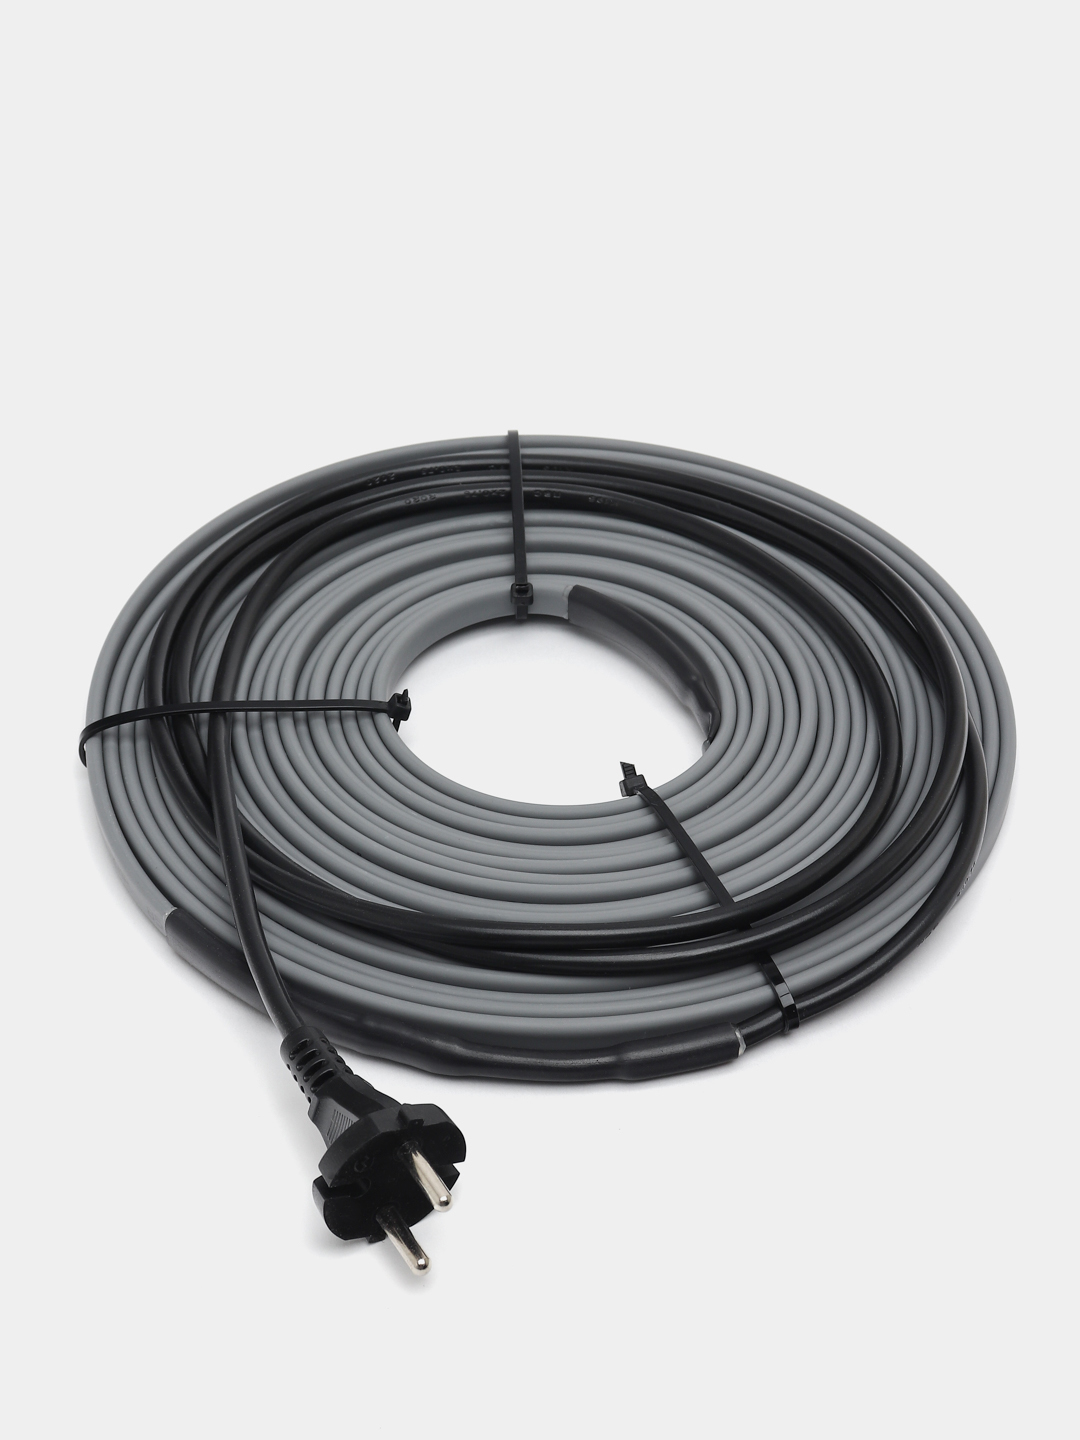 фото Греющий саморегулирующий кабель varmel vsrl30-2 для обогрева труб (12м)